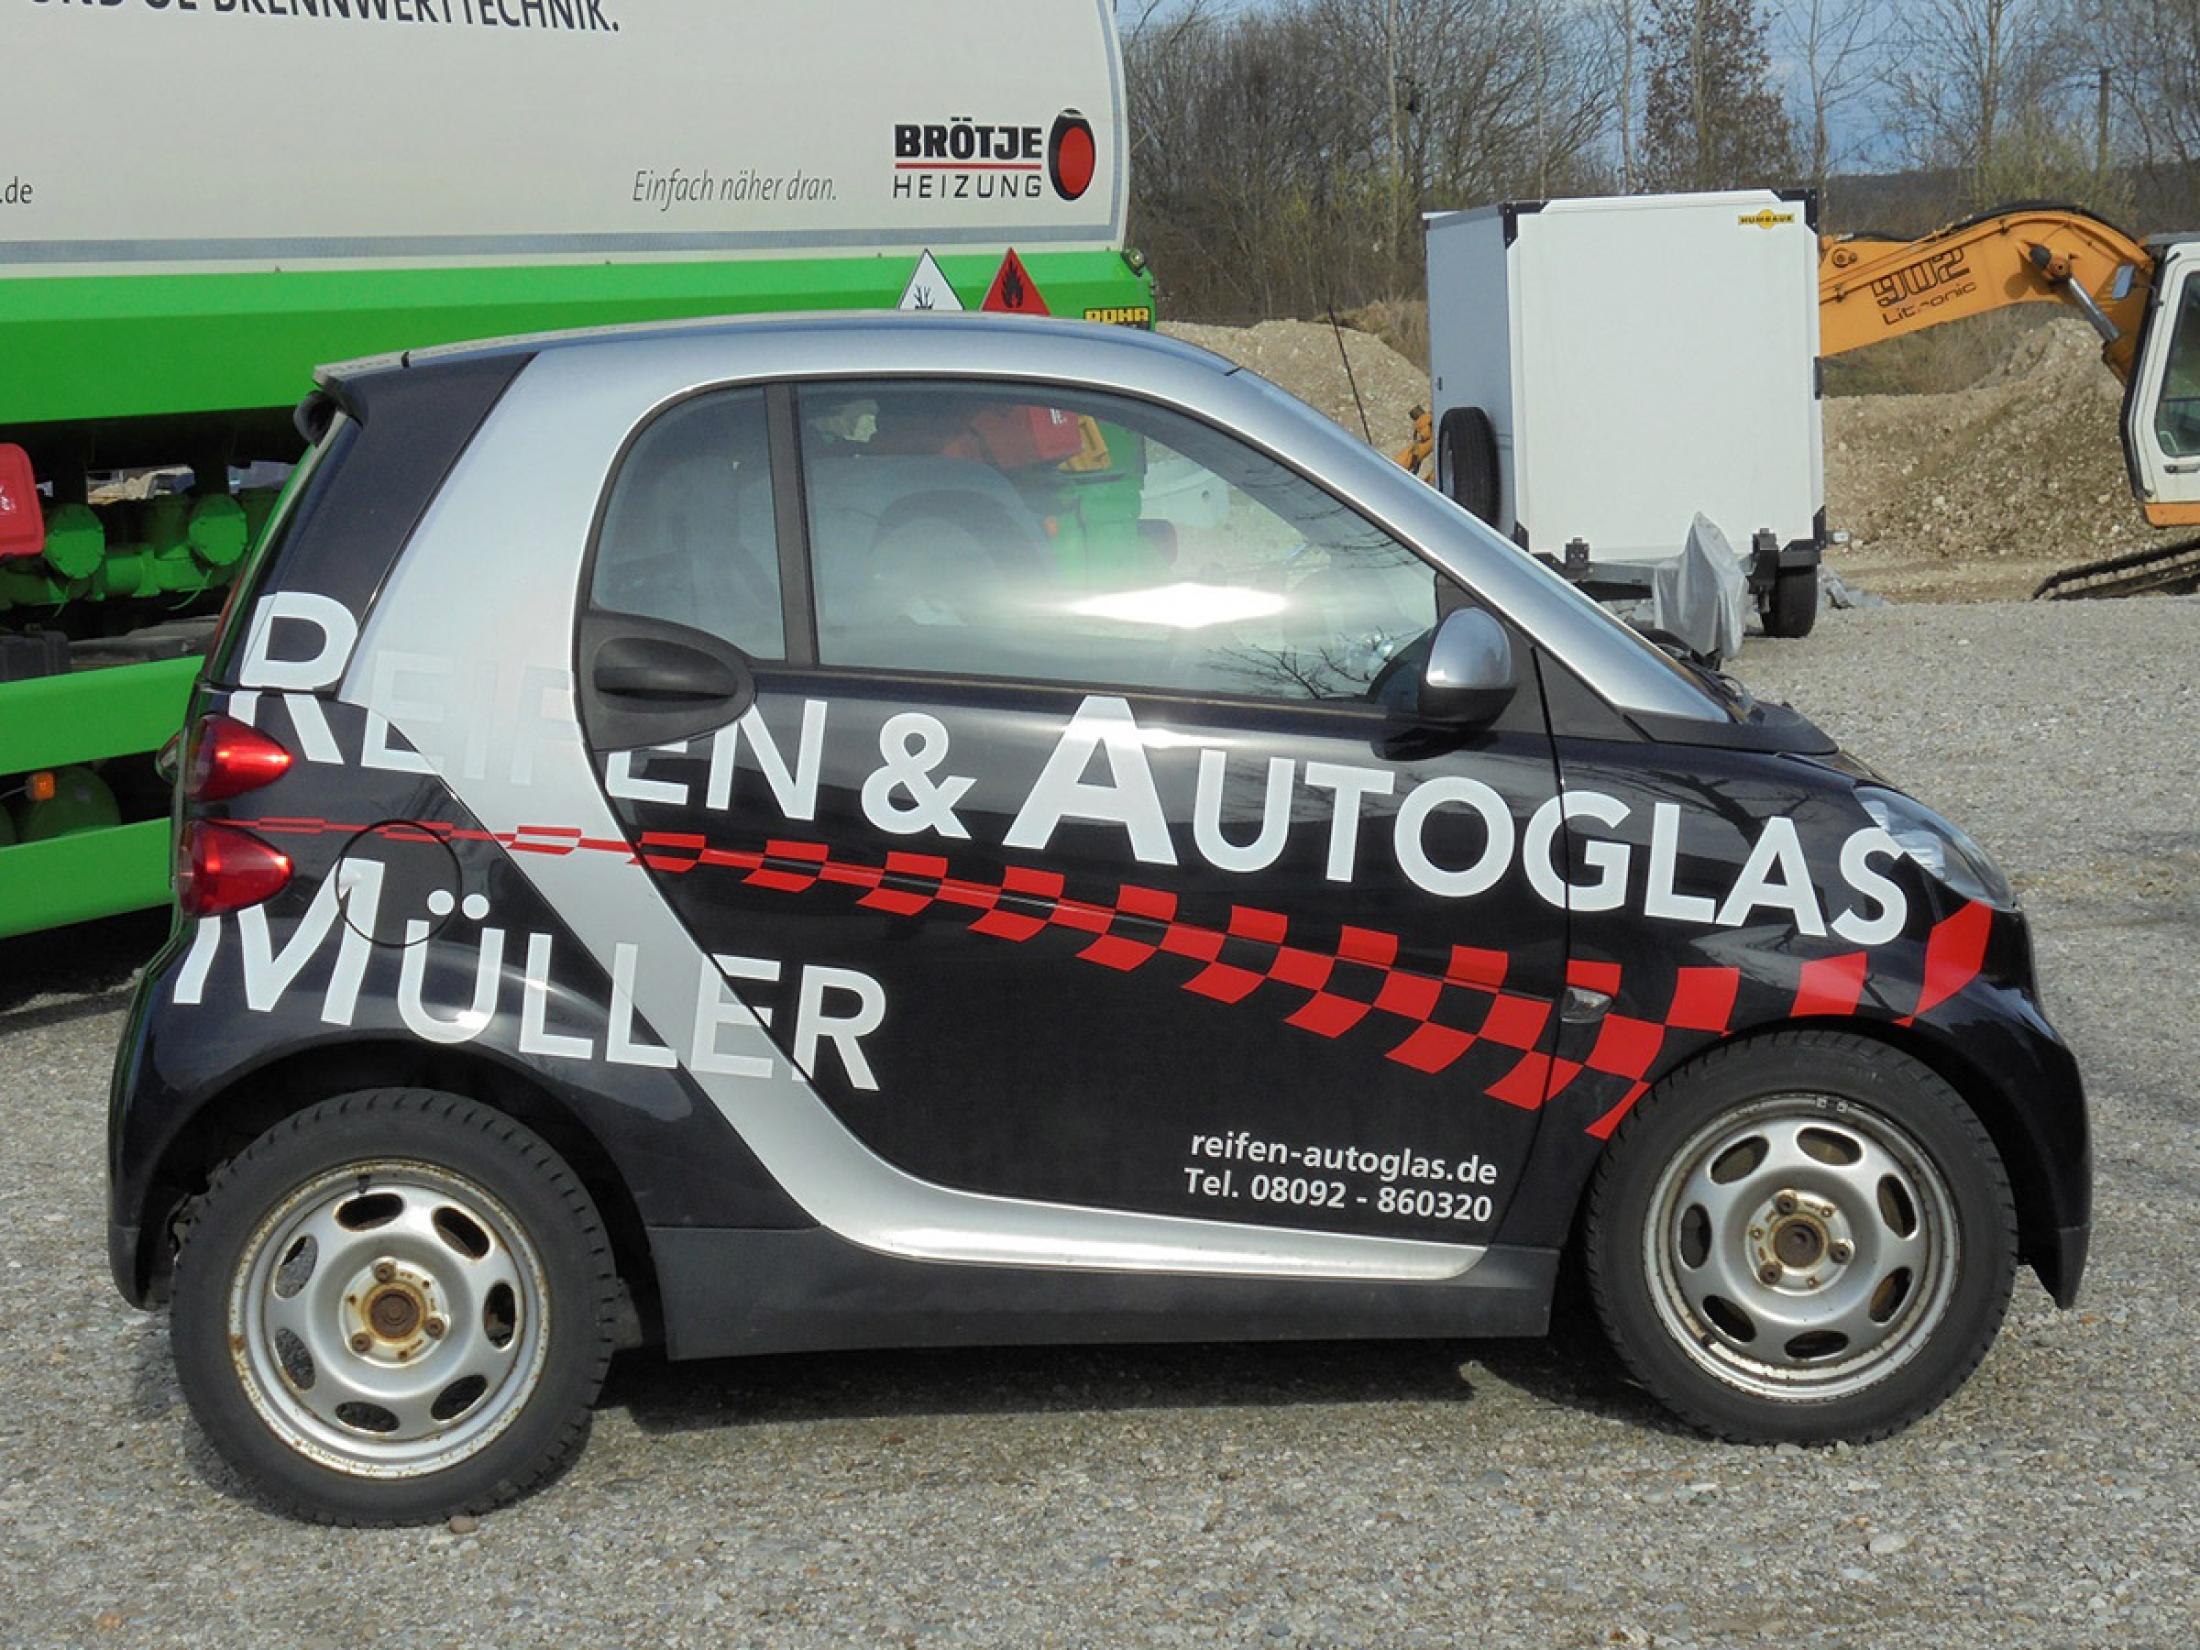 AUTOGLAS SPEZIALIST Grafing | Reifen & Autoglas Müller